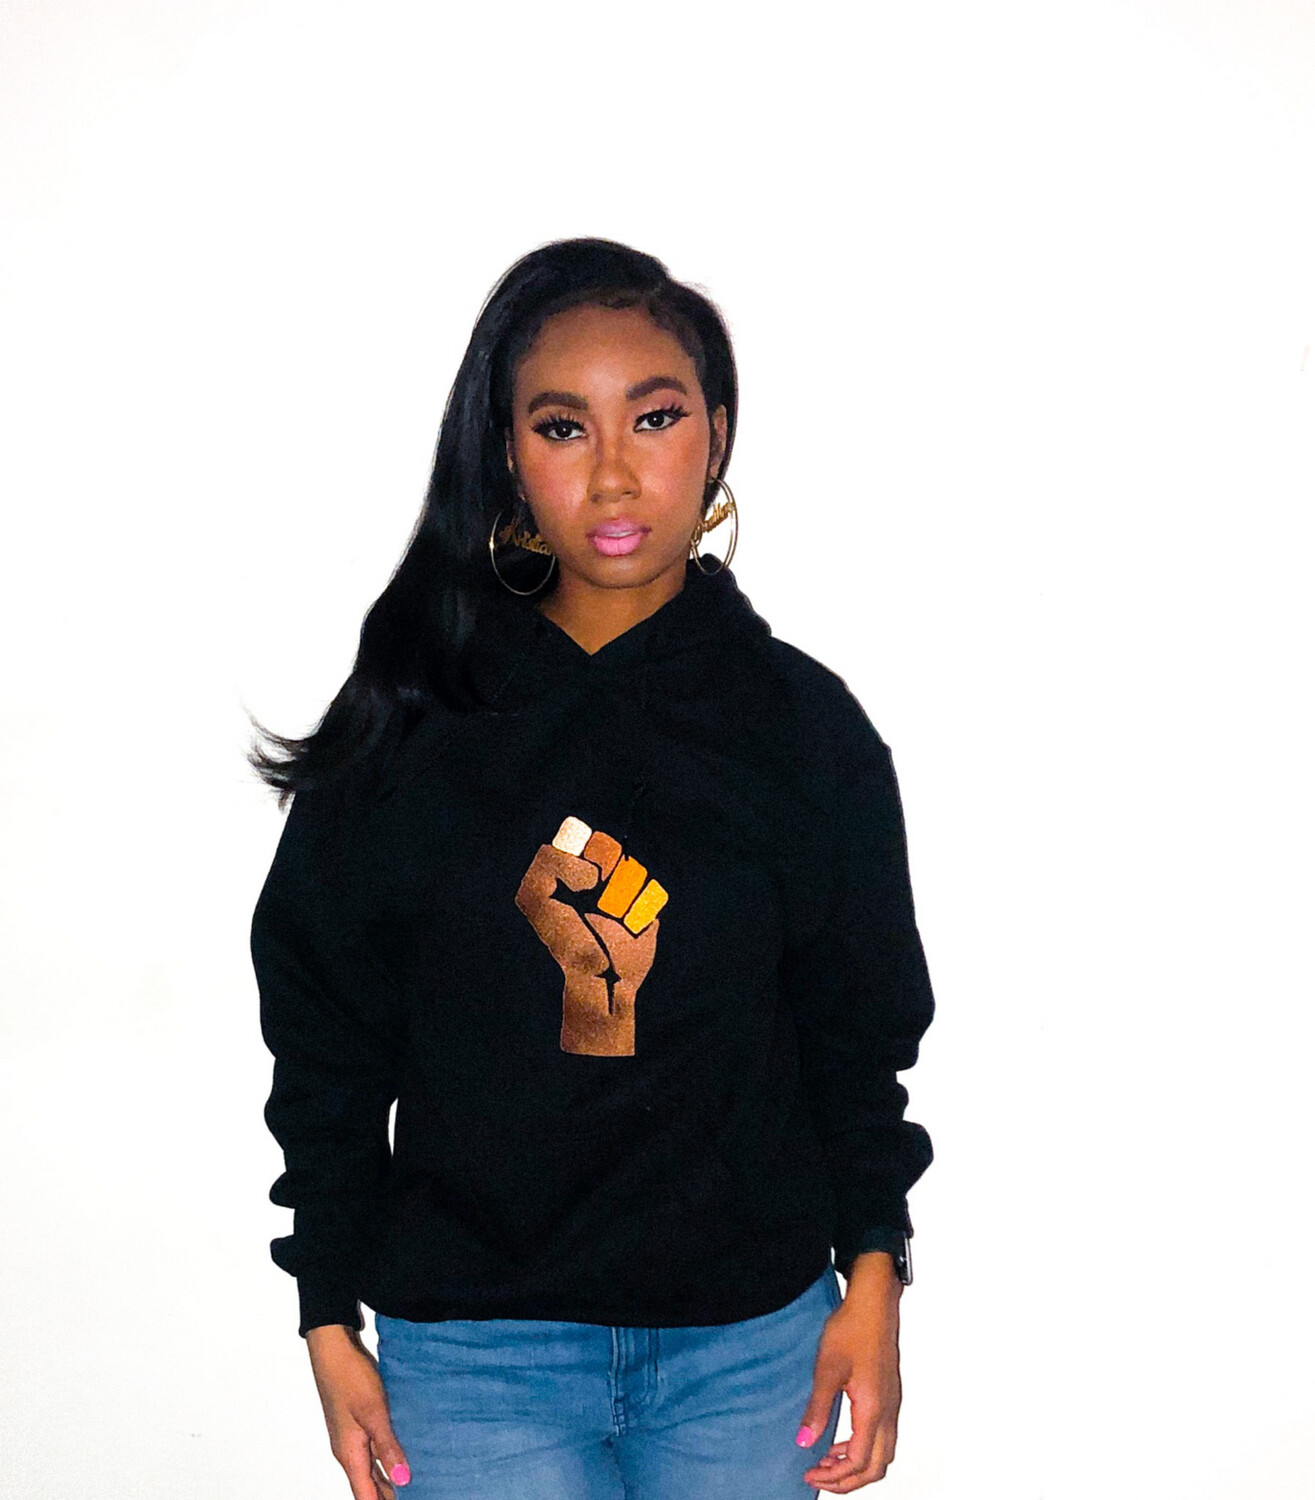 The Embroidered Black Power Fist - Black History Sweatshirts 